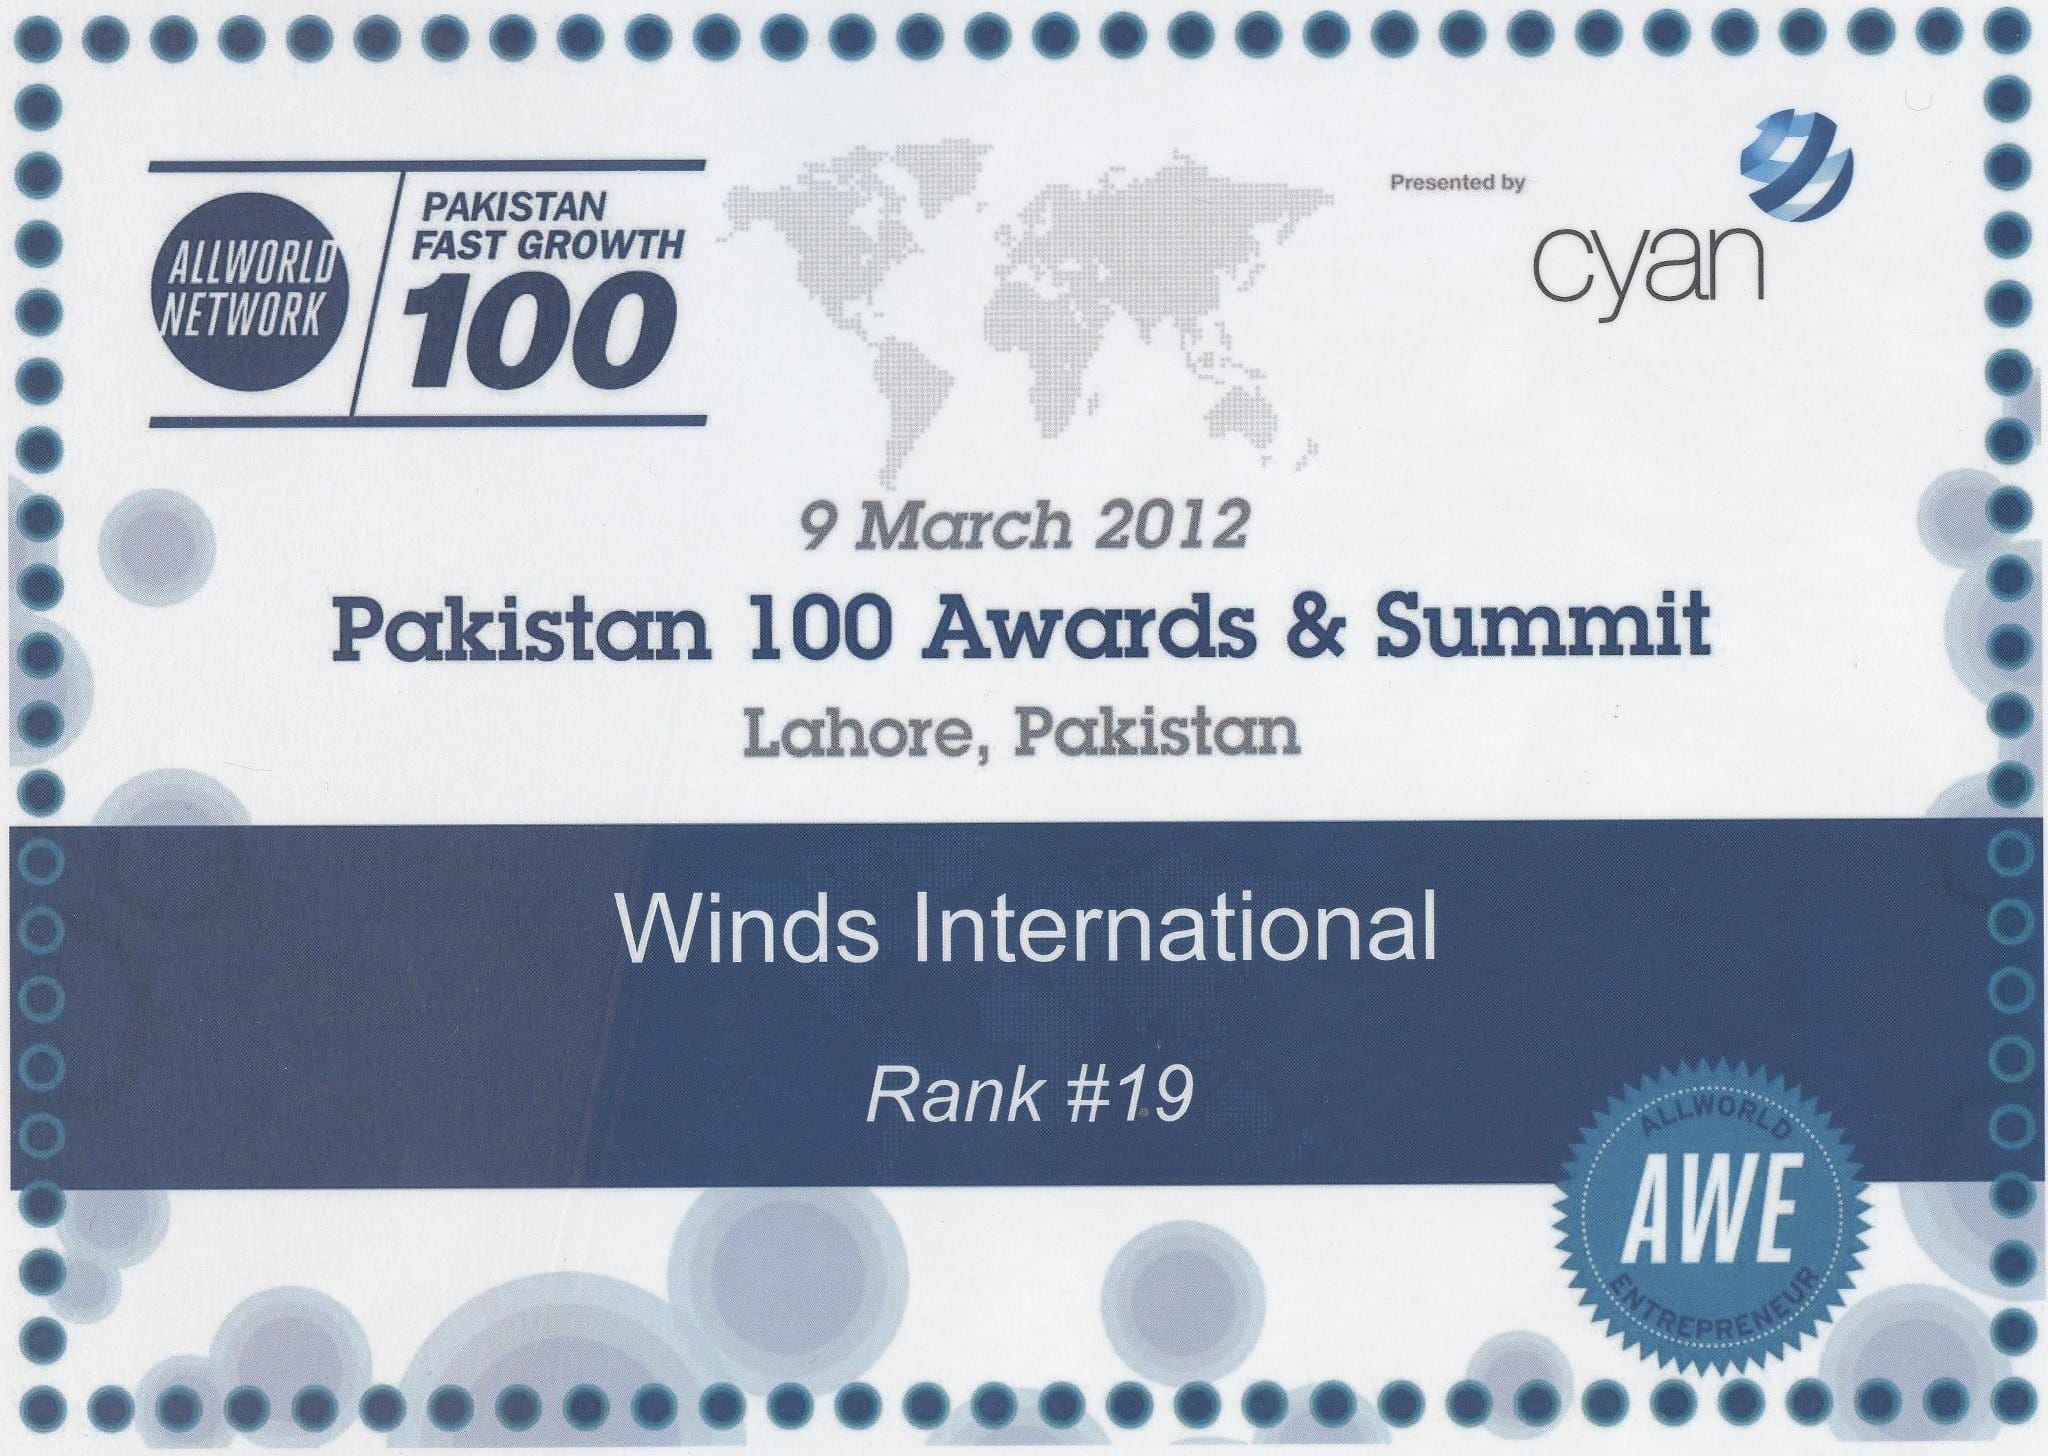 Pakistan Top 100 Fast Growth Companies Awards 2012 Winds International